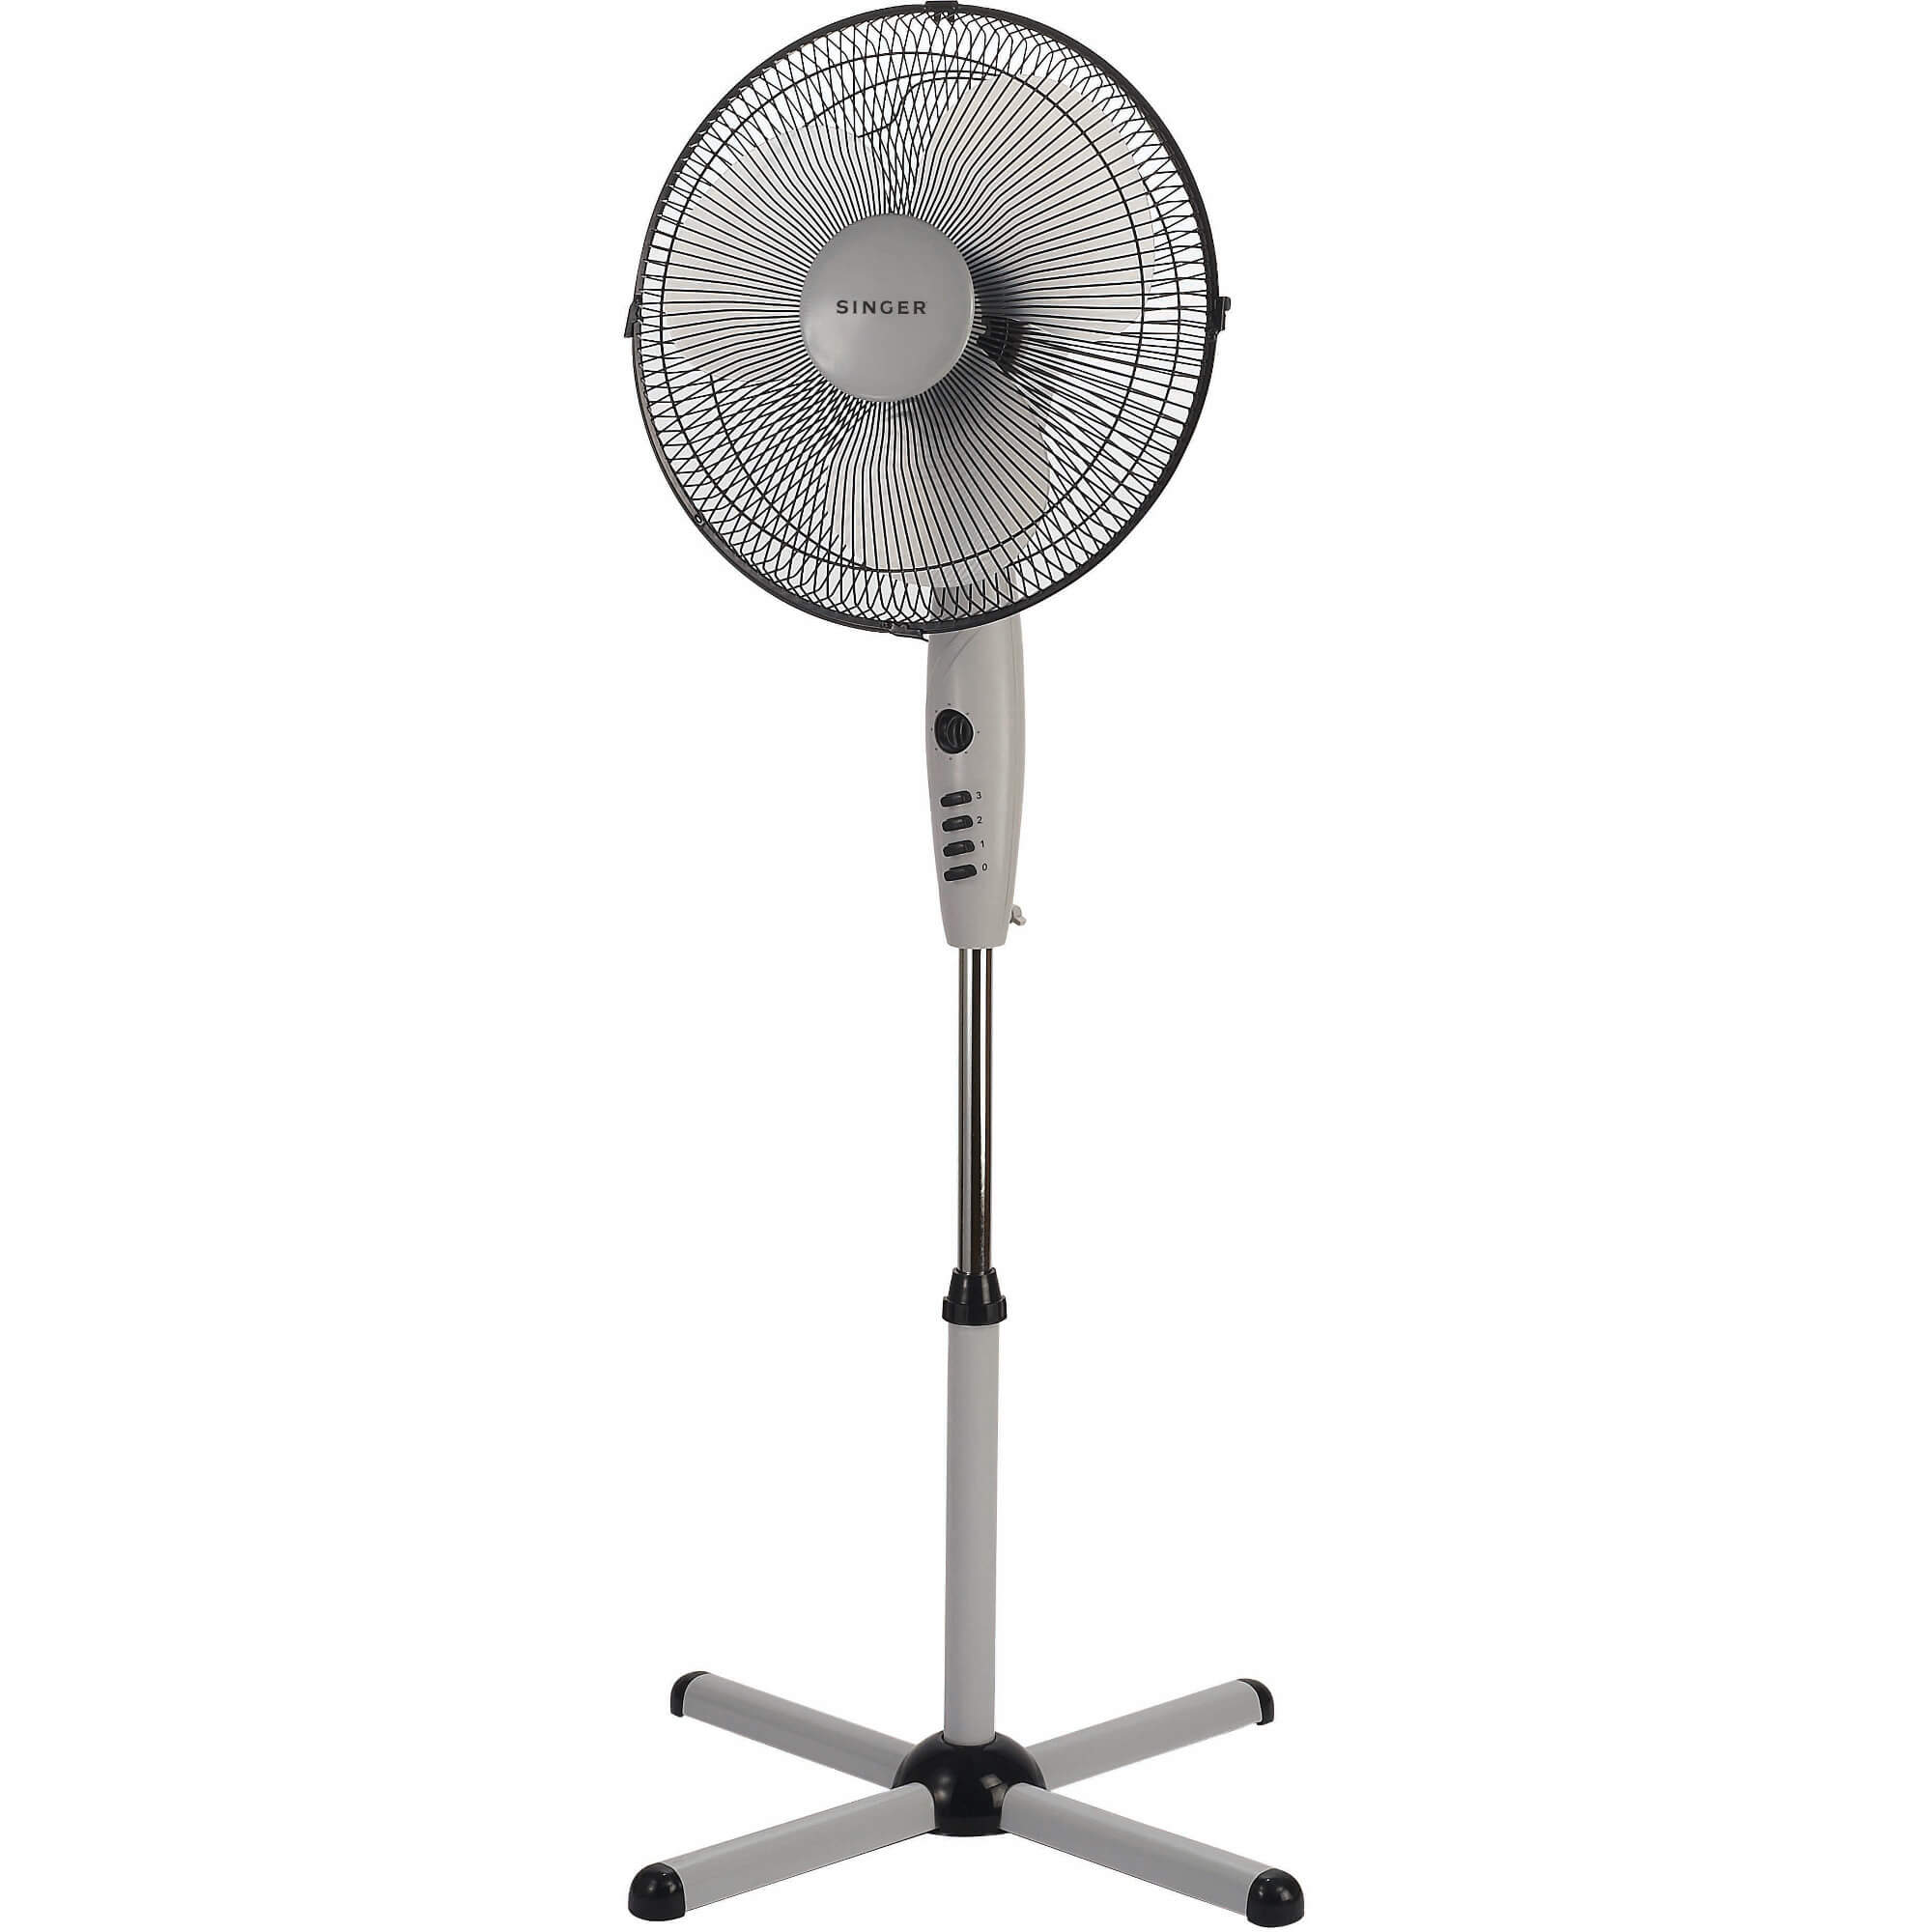  Ventilator Singer SF40, 50 W, timer 